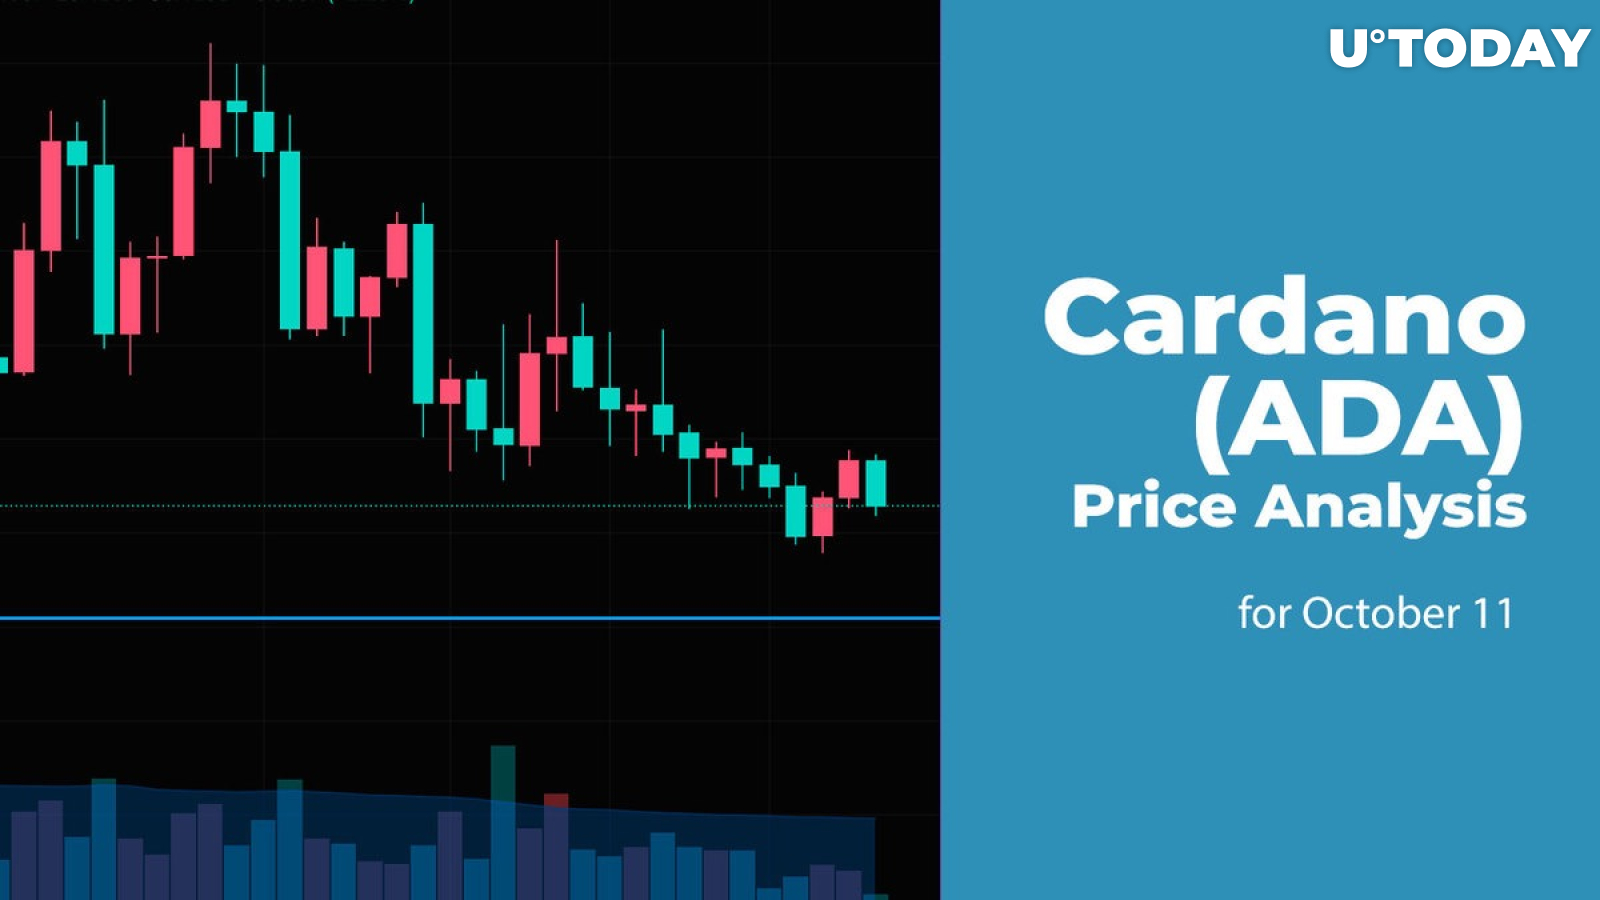 Cardano (ADA) Price Analysis for October 11